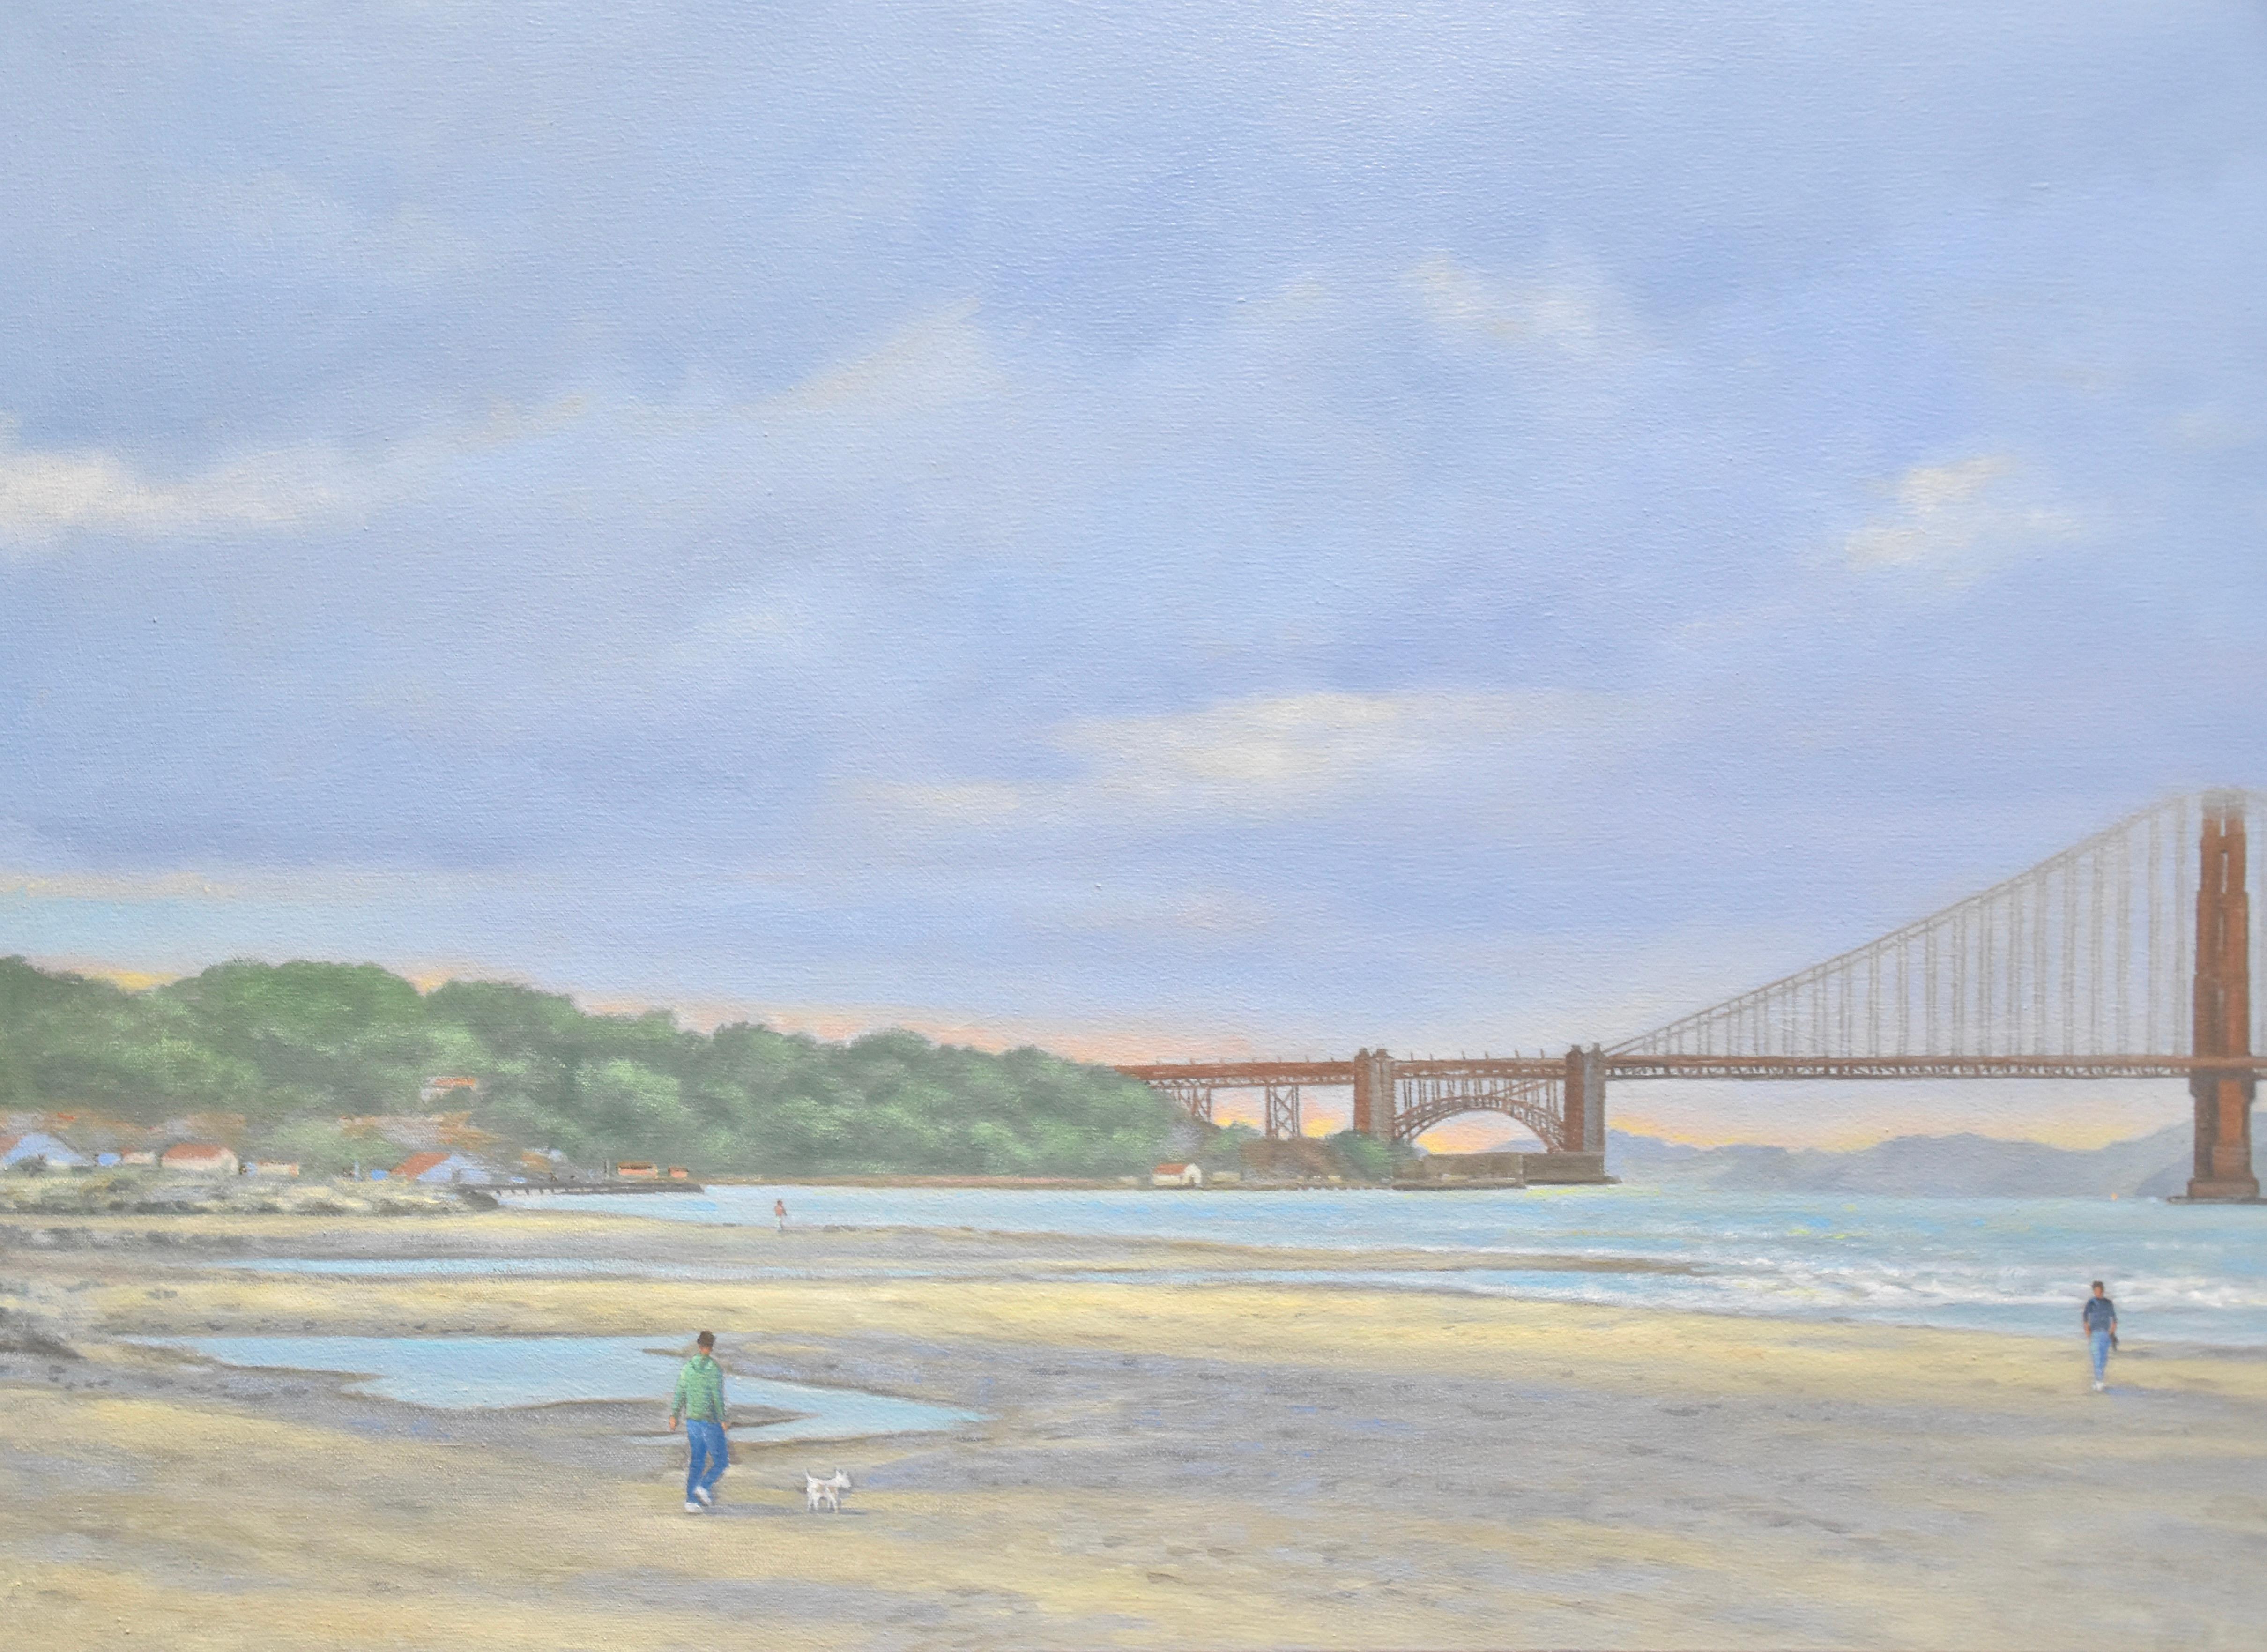 'Beach at Crissy Field' (San Francisco, California) - Painting by Willard Dixon